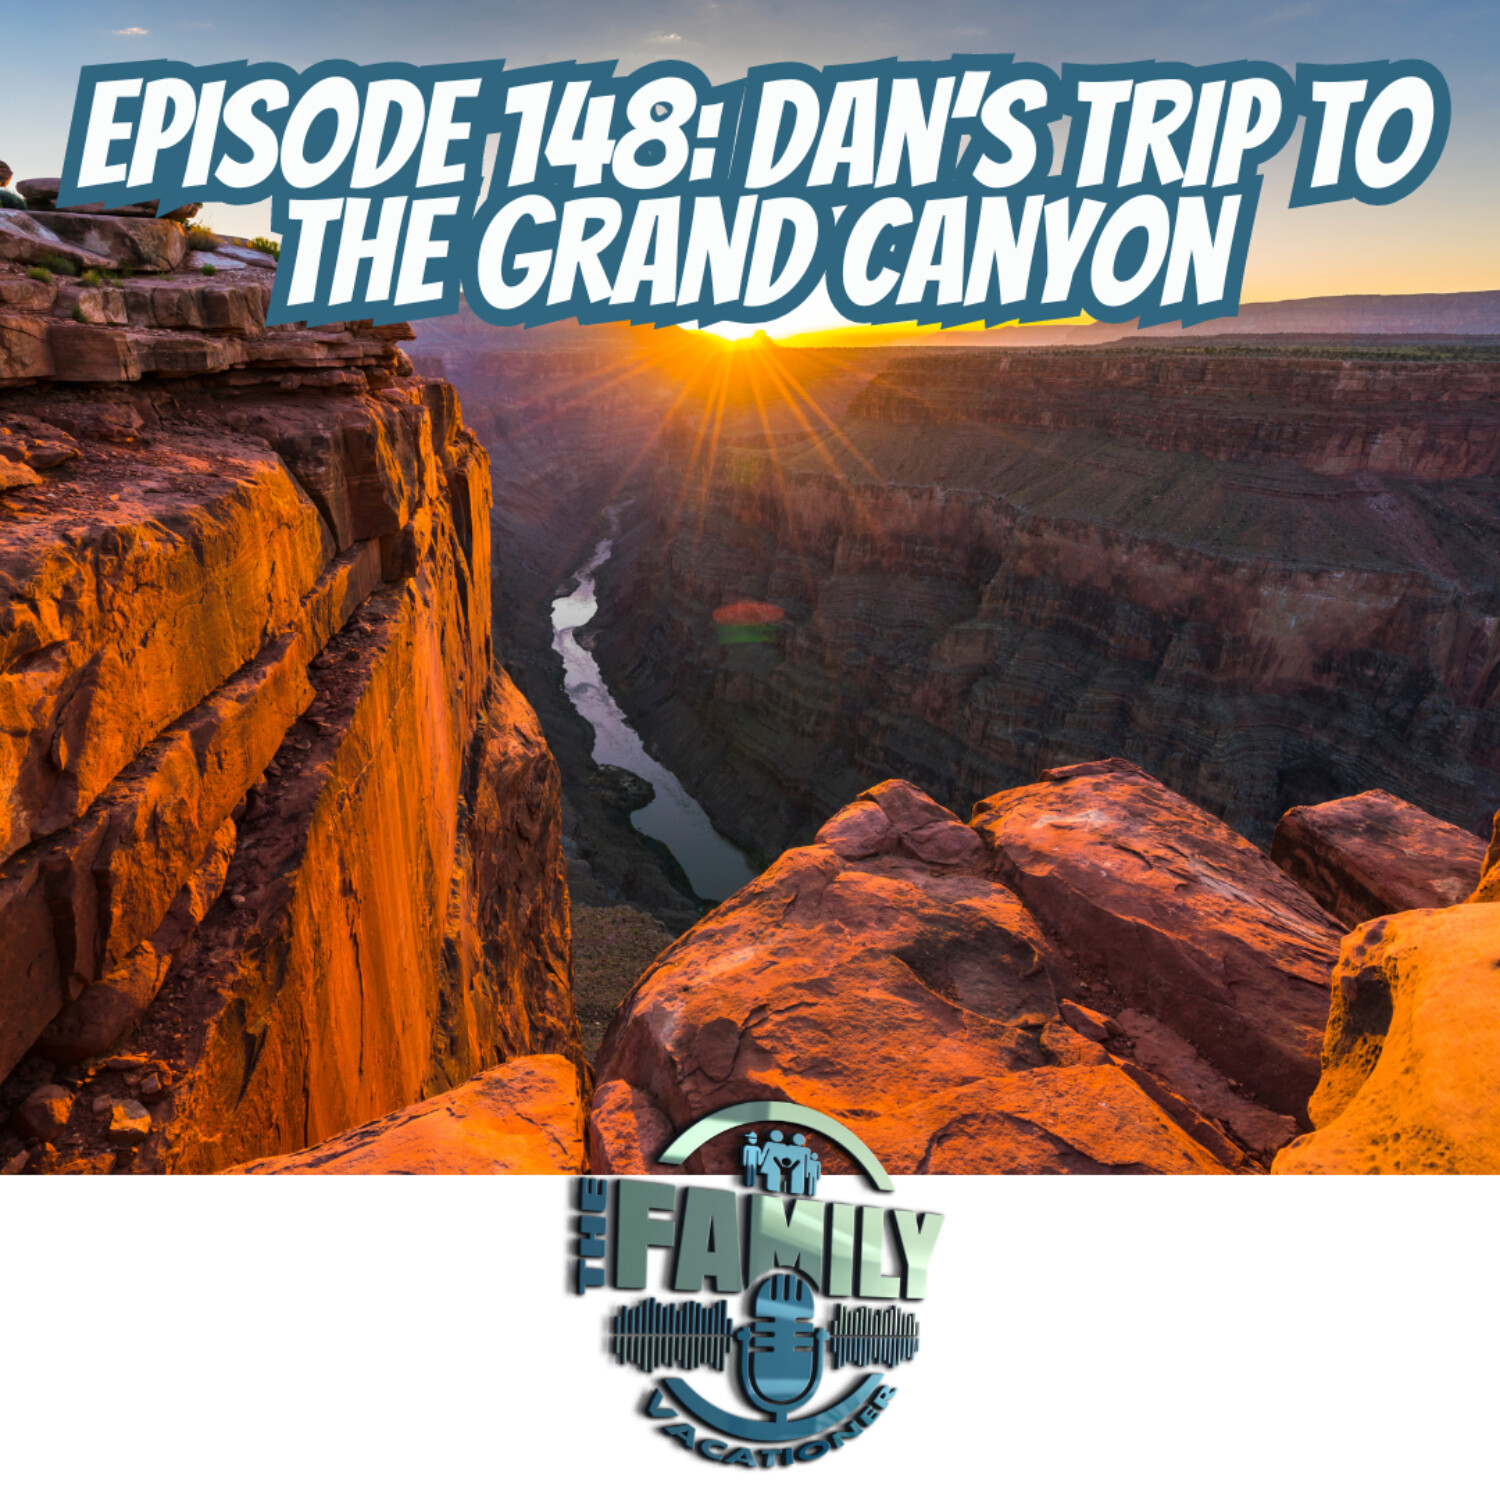 Dan's Trip to the Grand Canyon